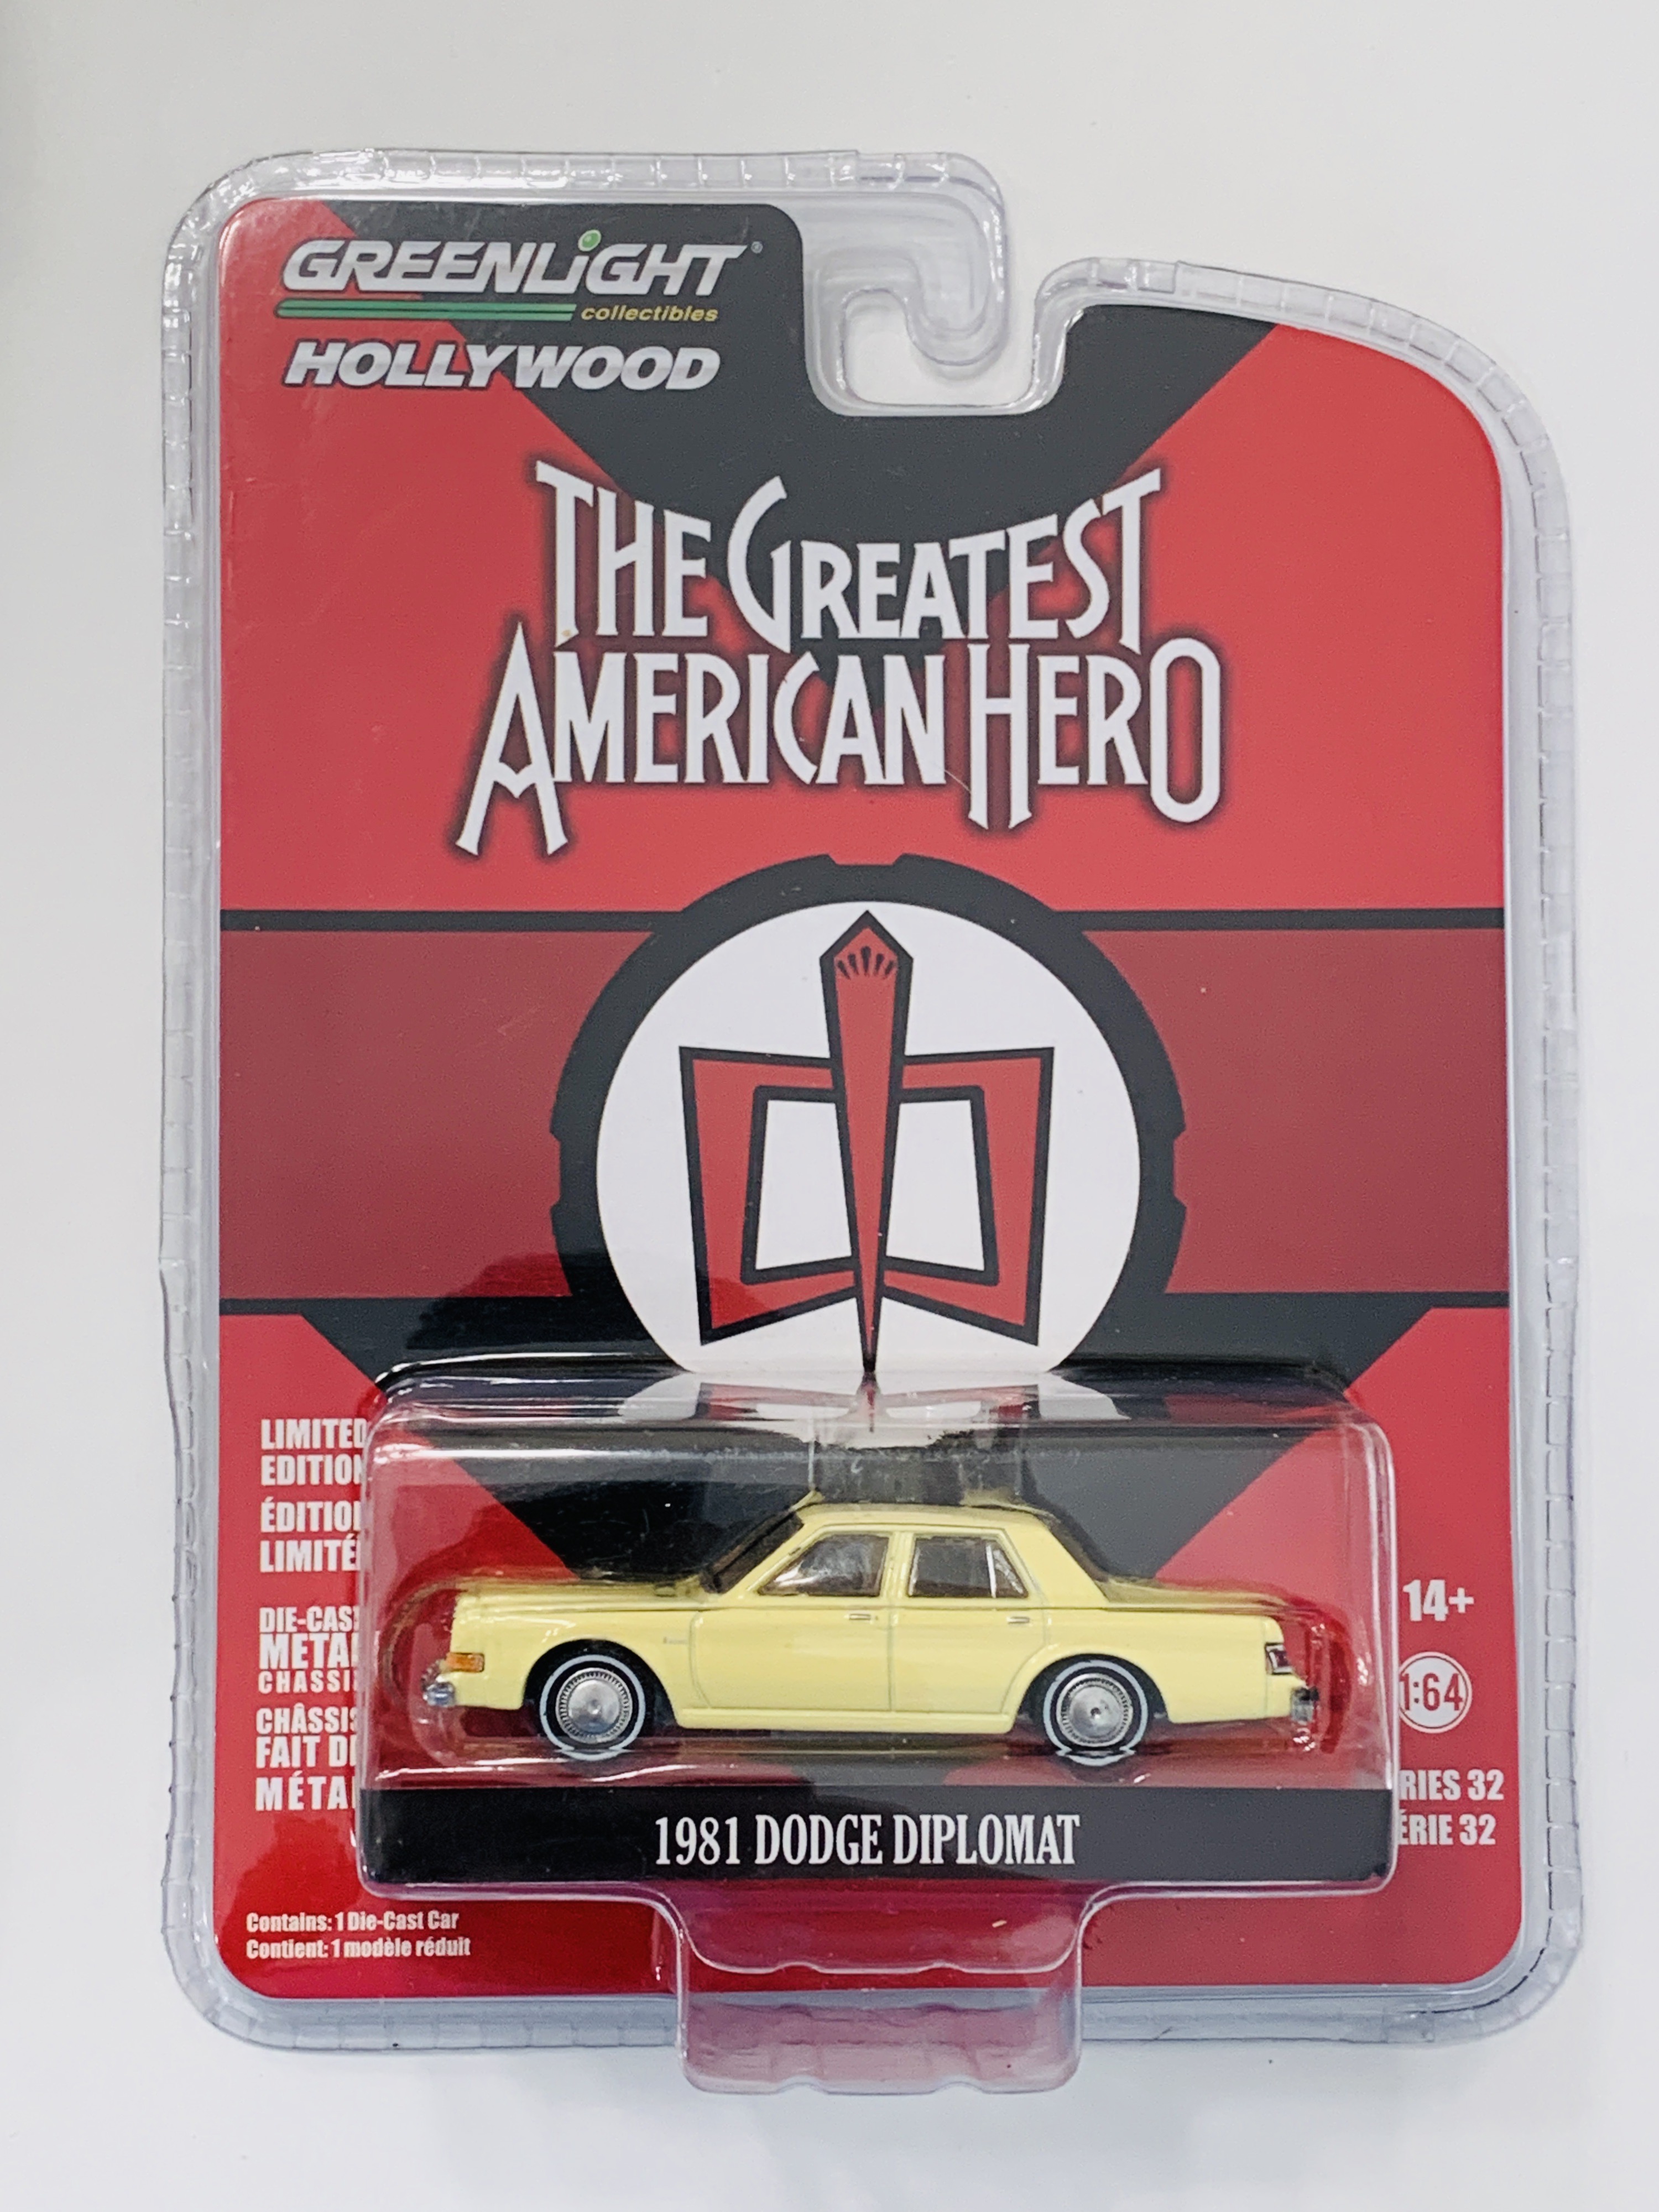 Greenlight Hollywood The Greatest American Hero 1981 Dodge Diplomat